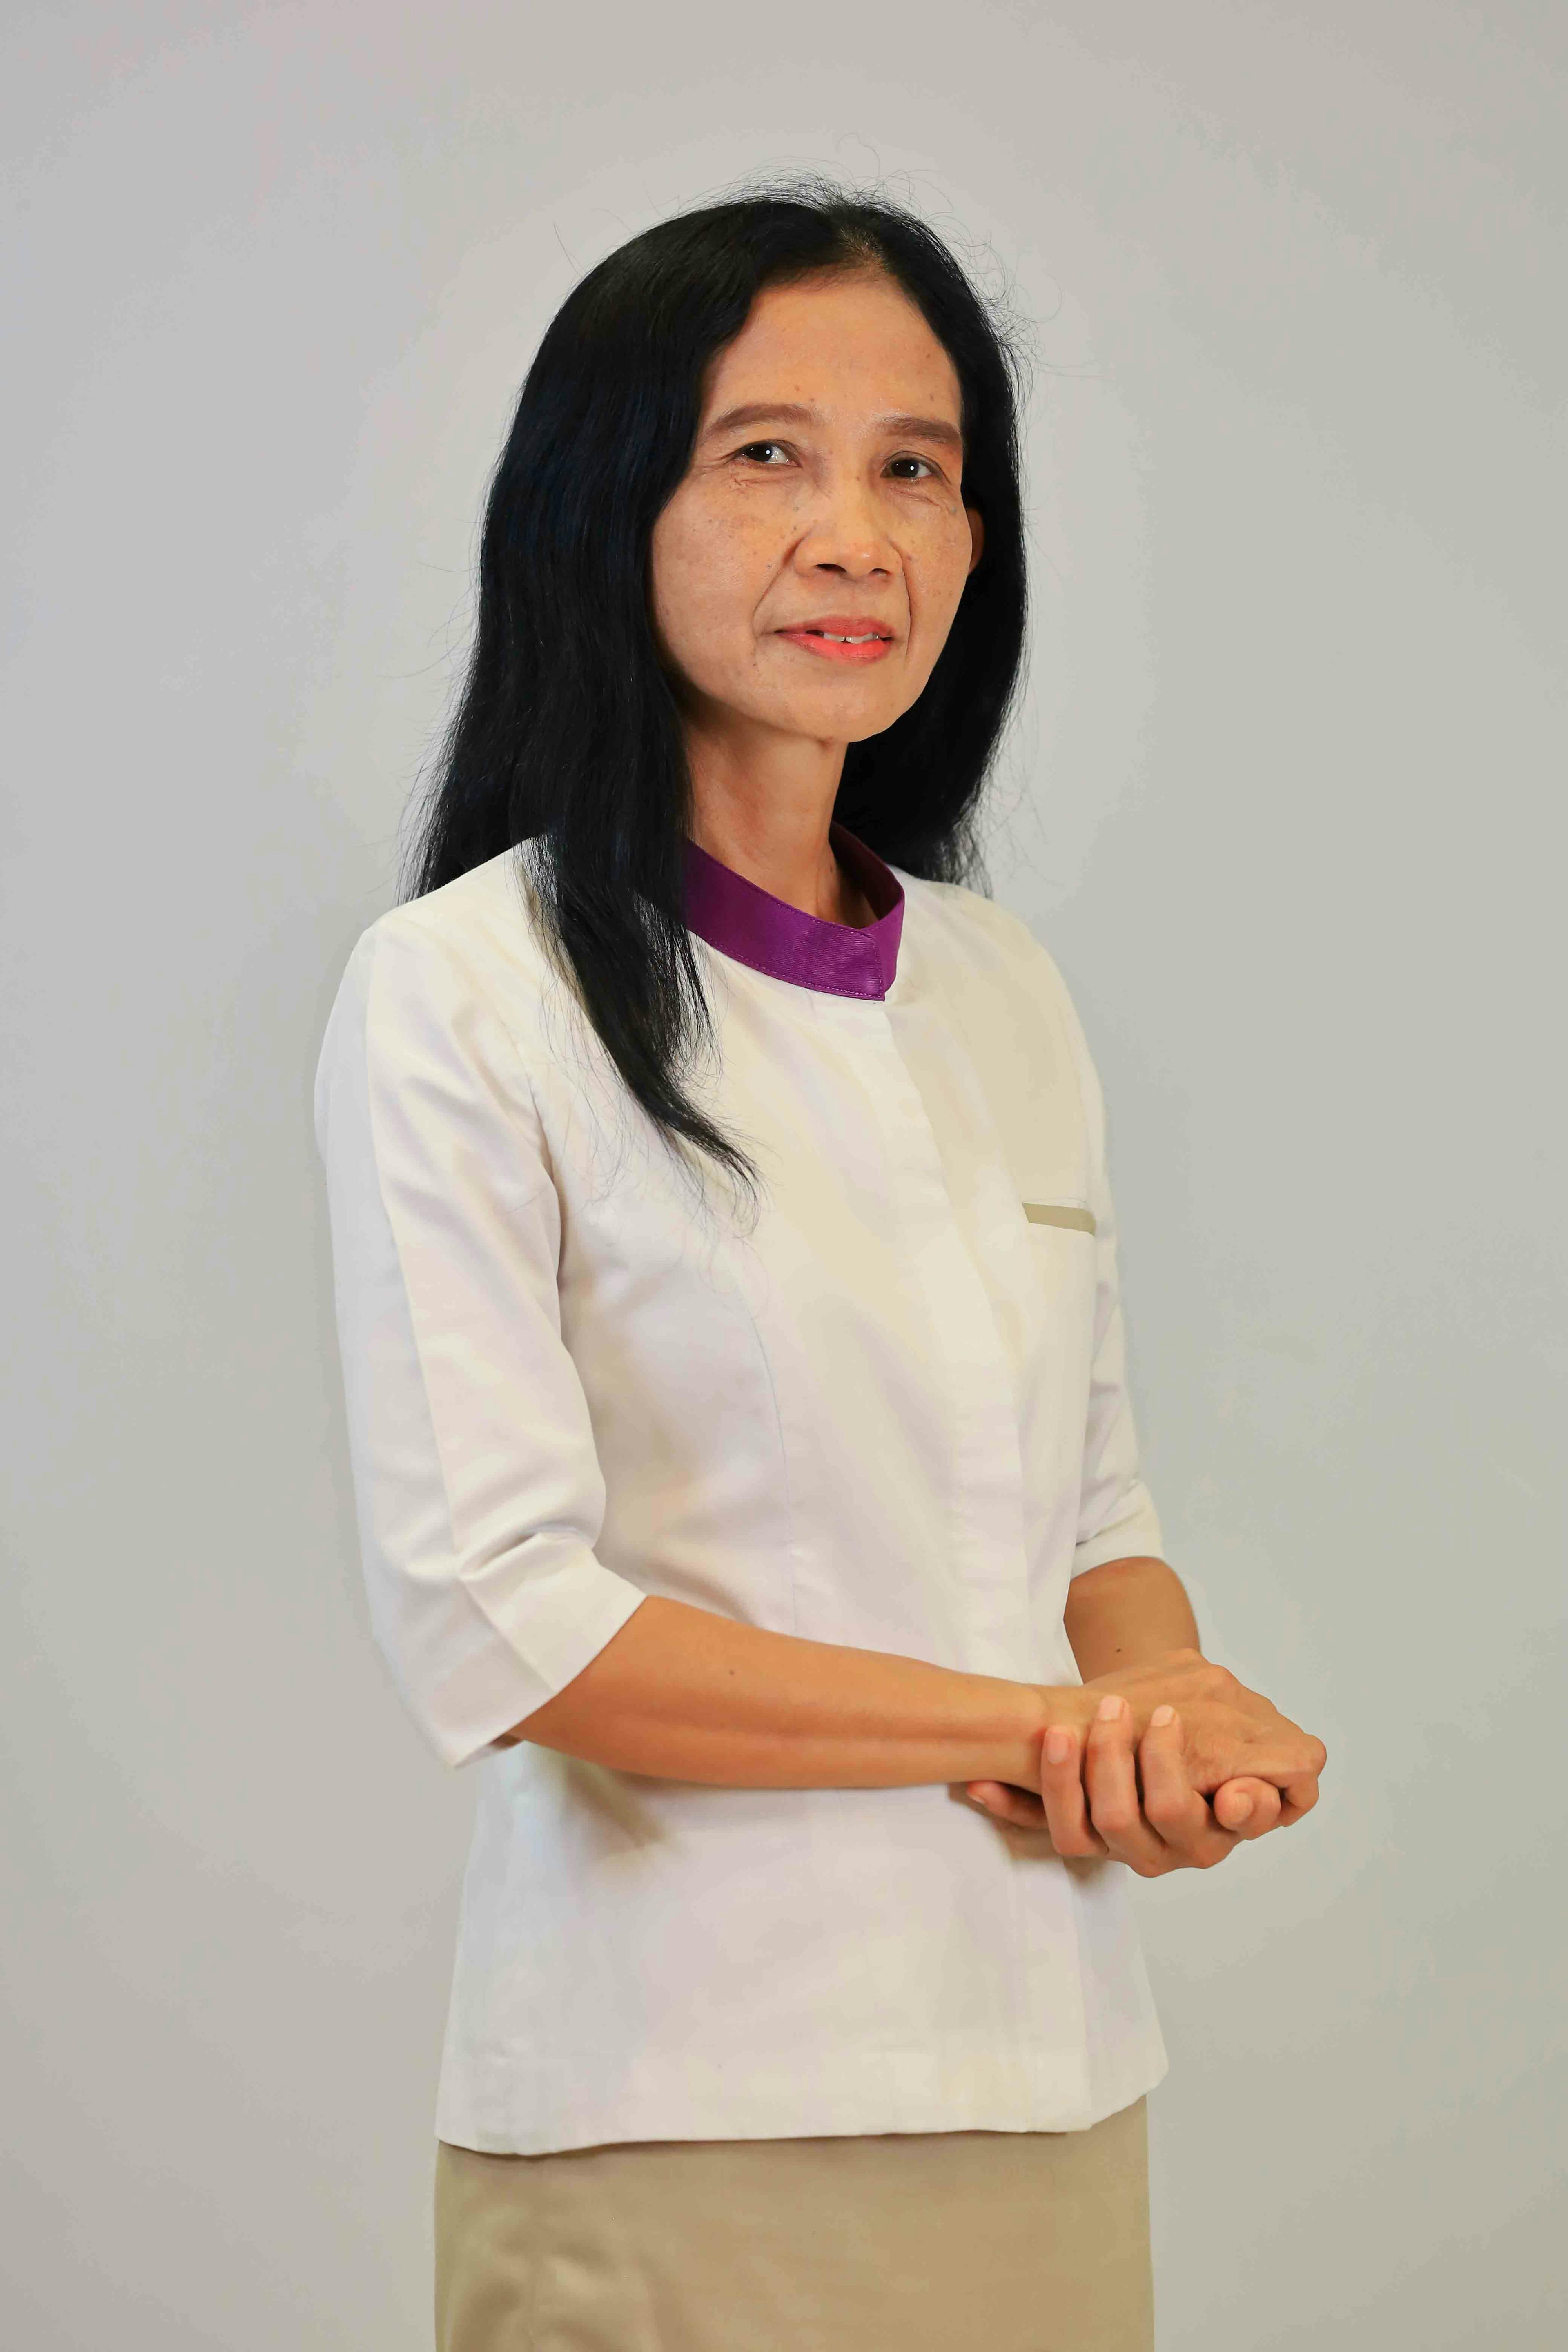 Teacher Jira choomark